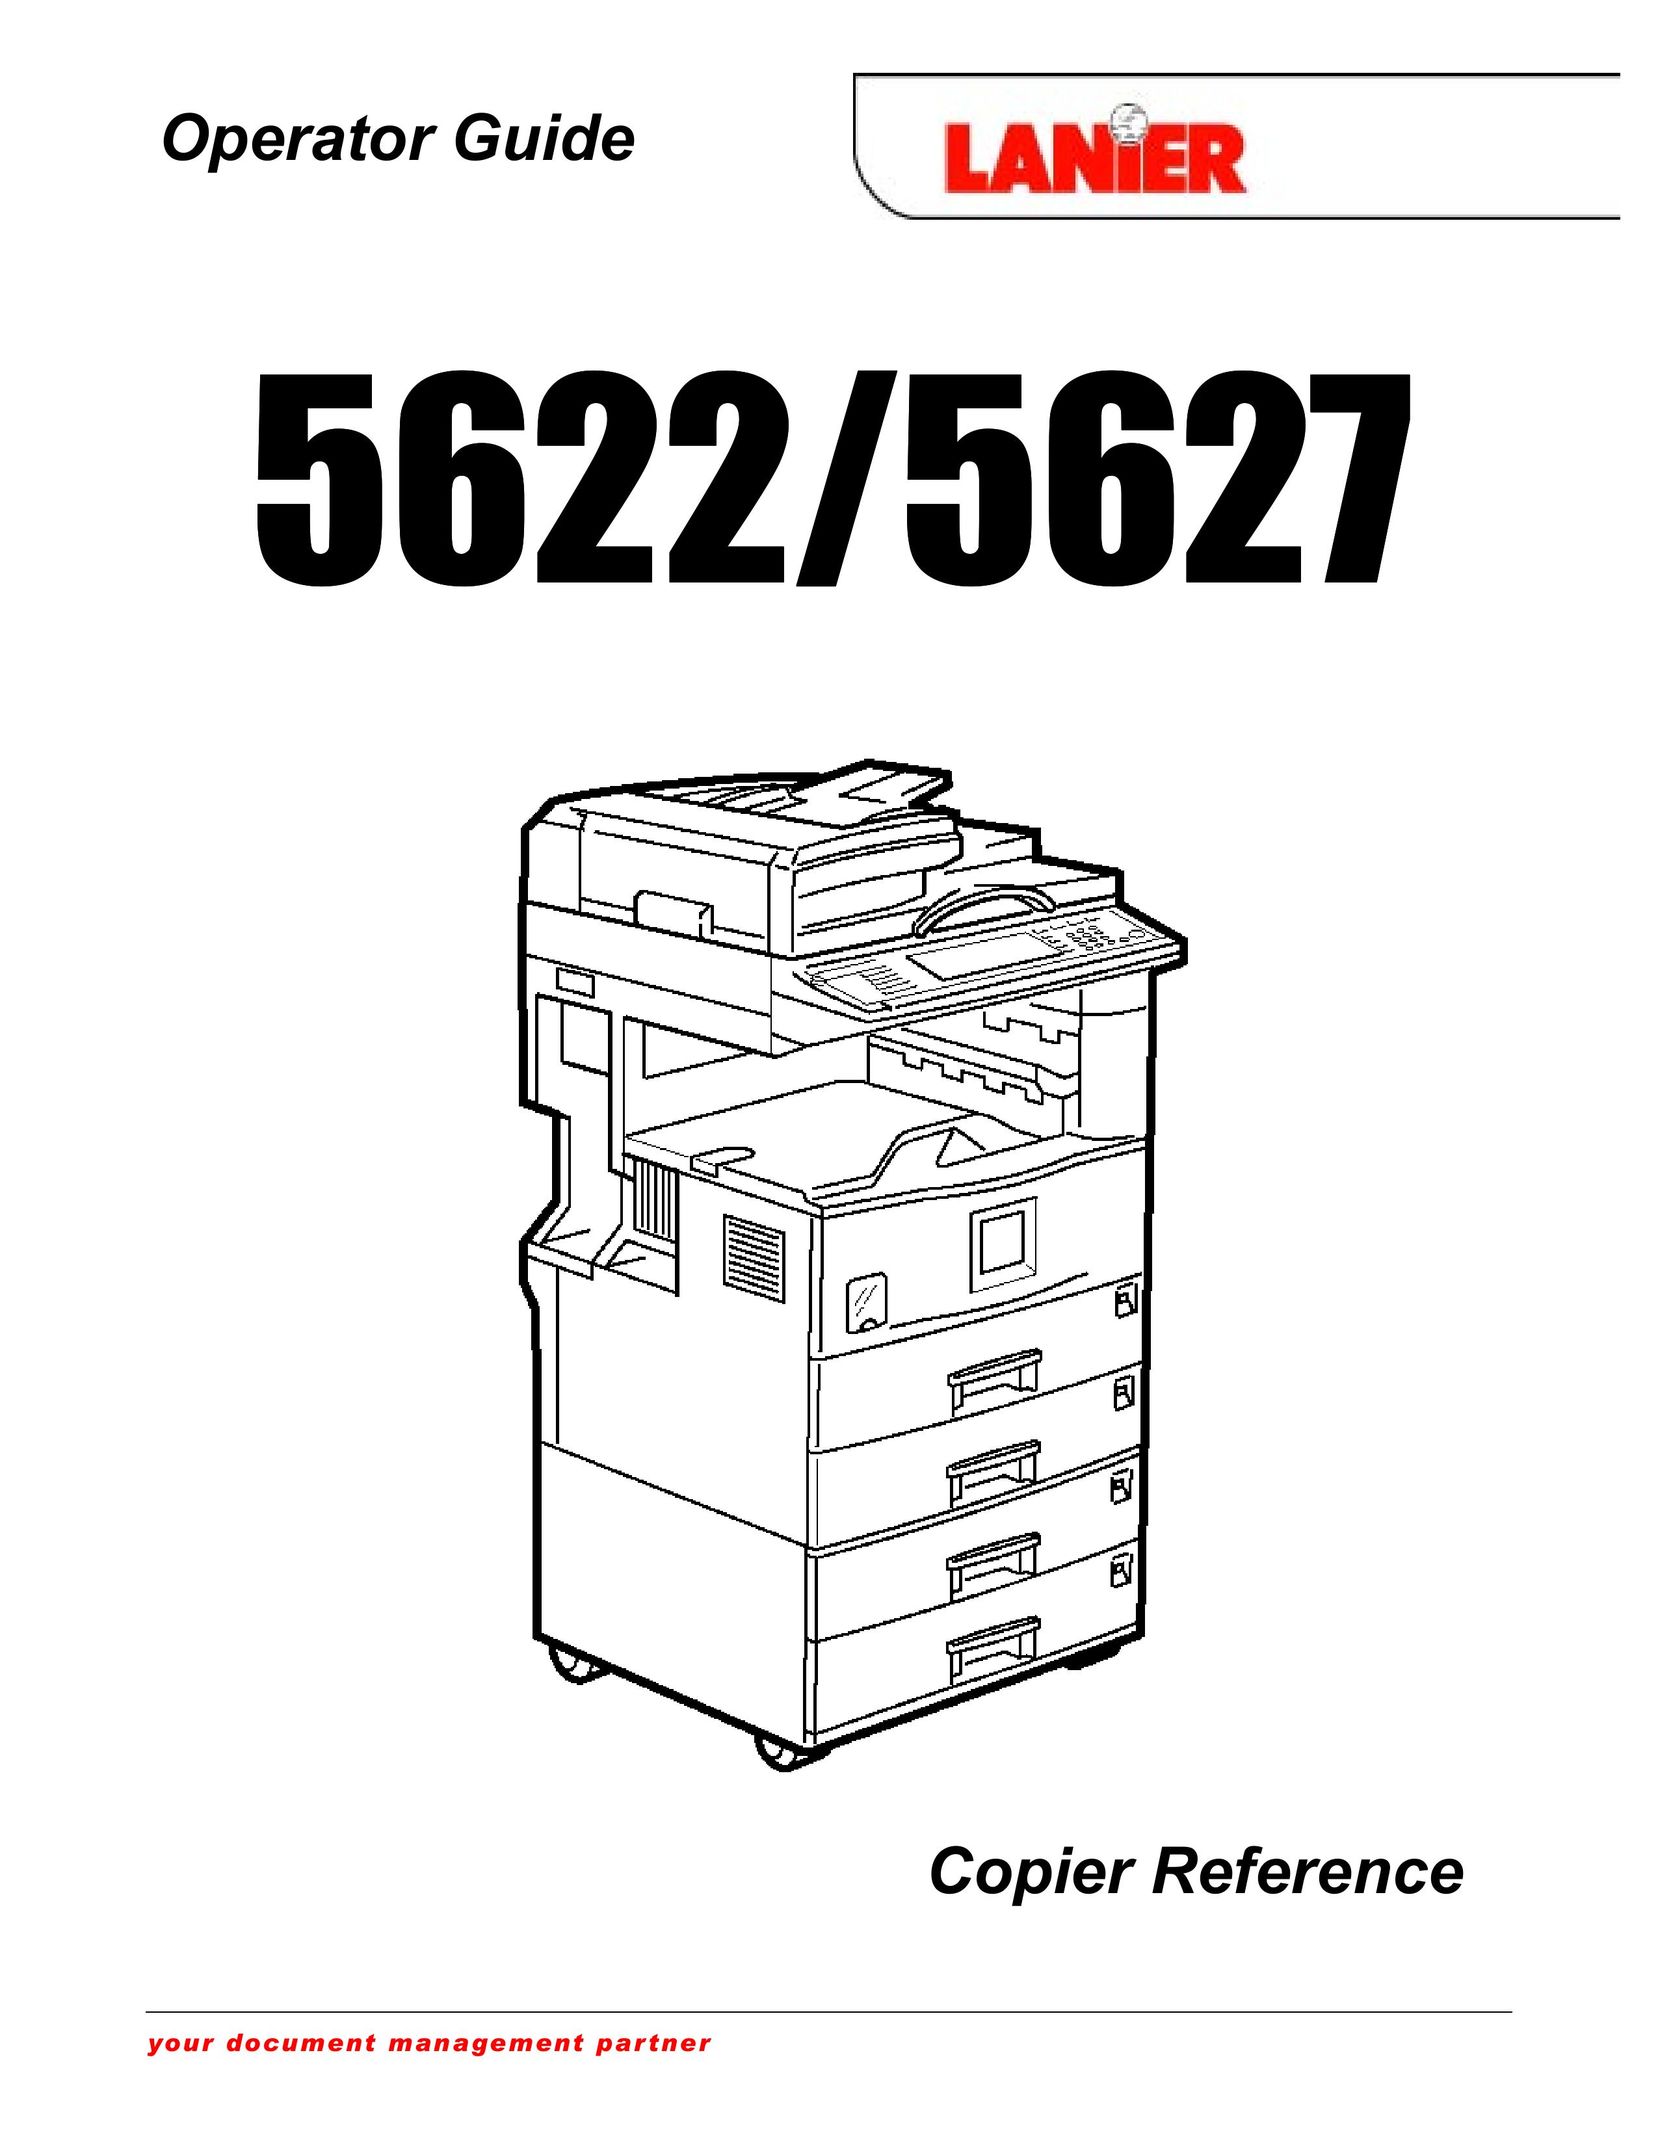 Lanier 2527 Copier User Manual